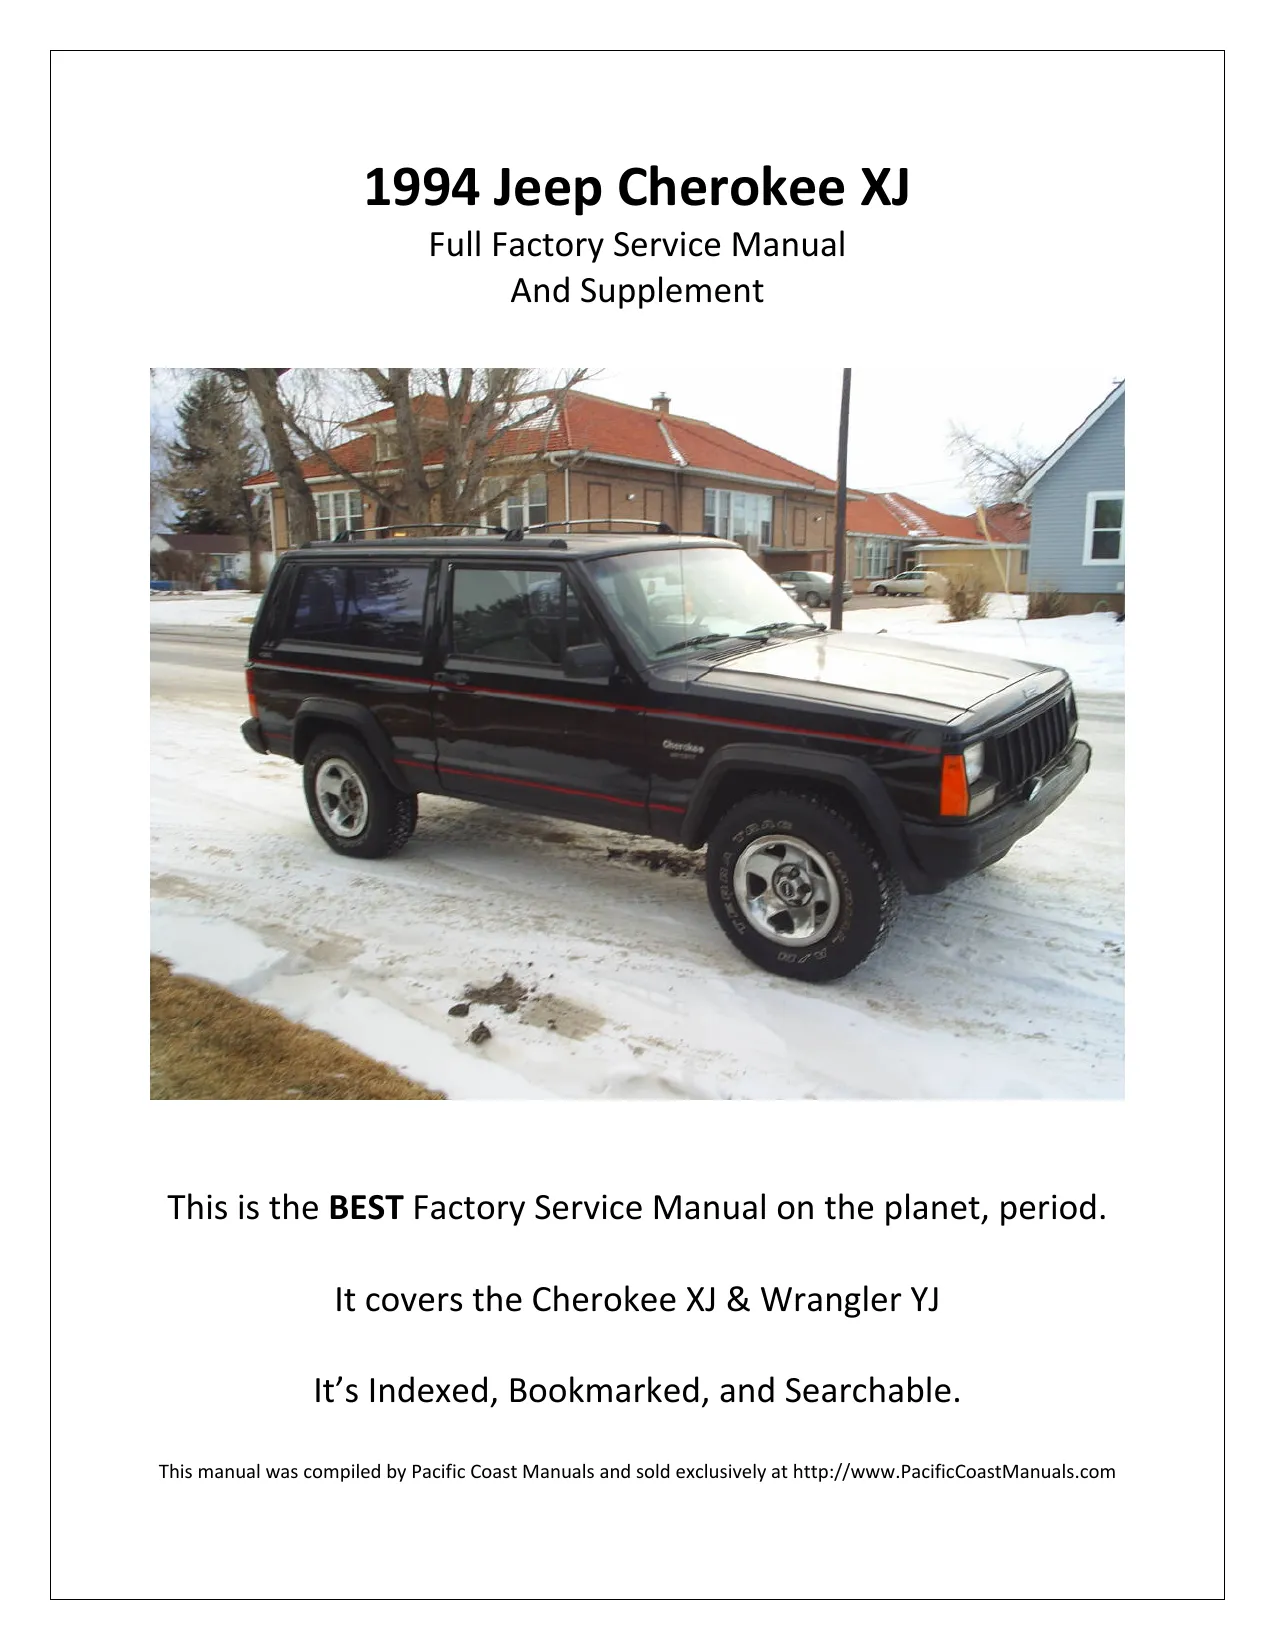 1994 Jeep Cherokee XJ repair/shop manual